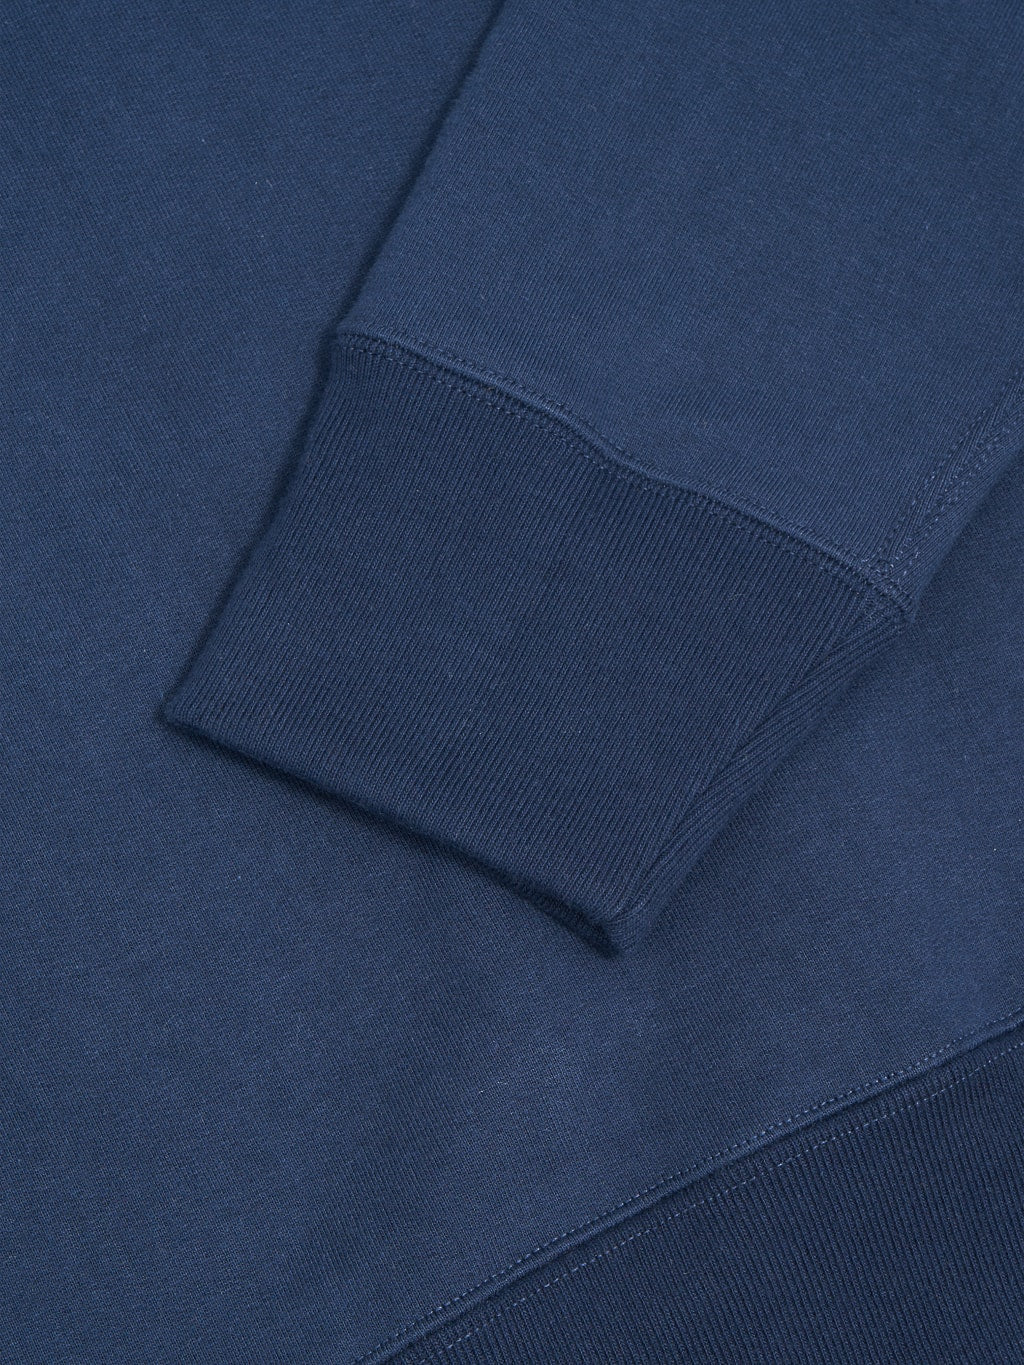 Merz B Schwanen loopwheeled swearshirt heavy ink blue elastic cuff